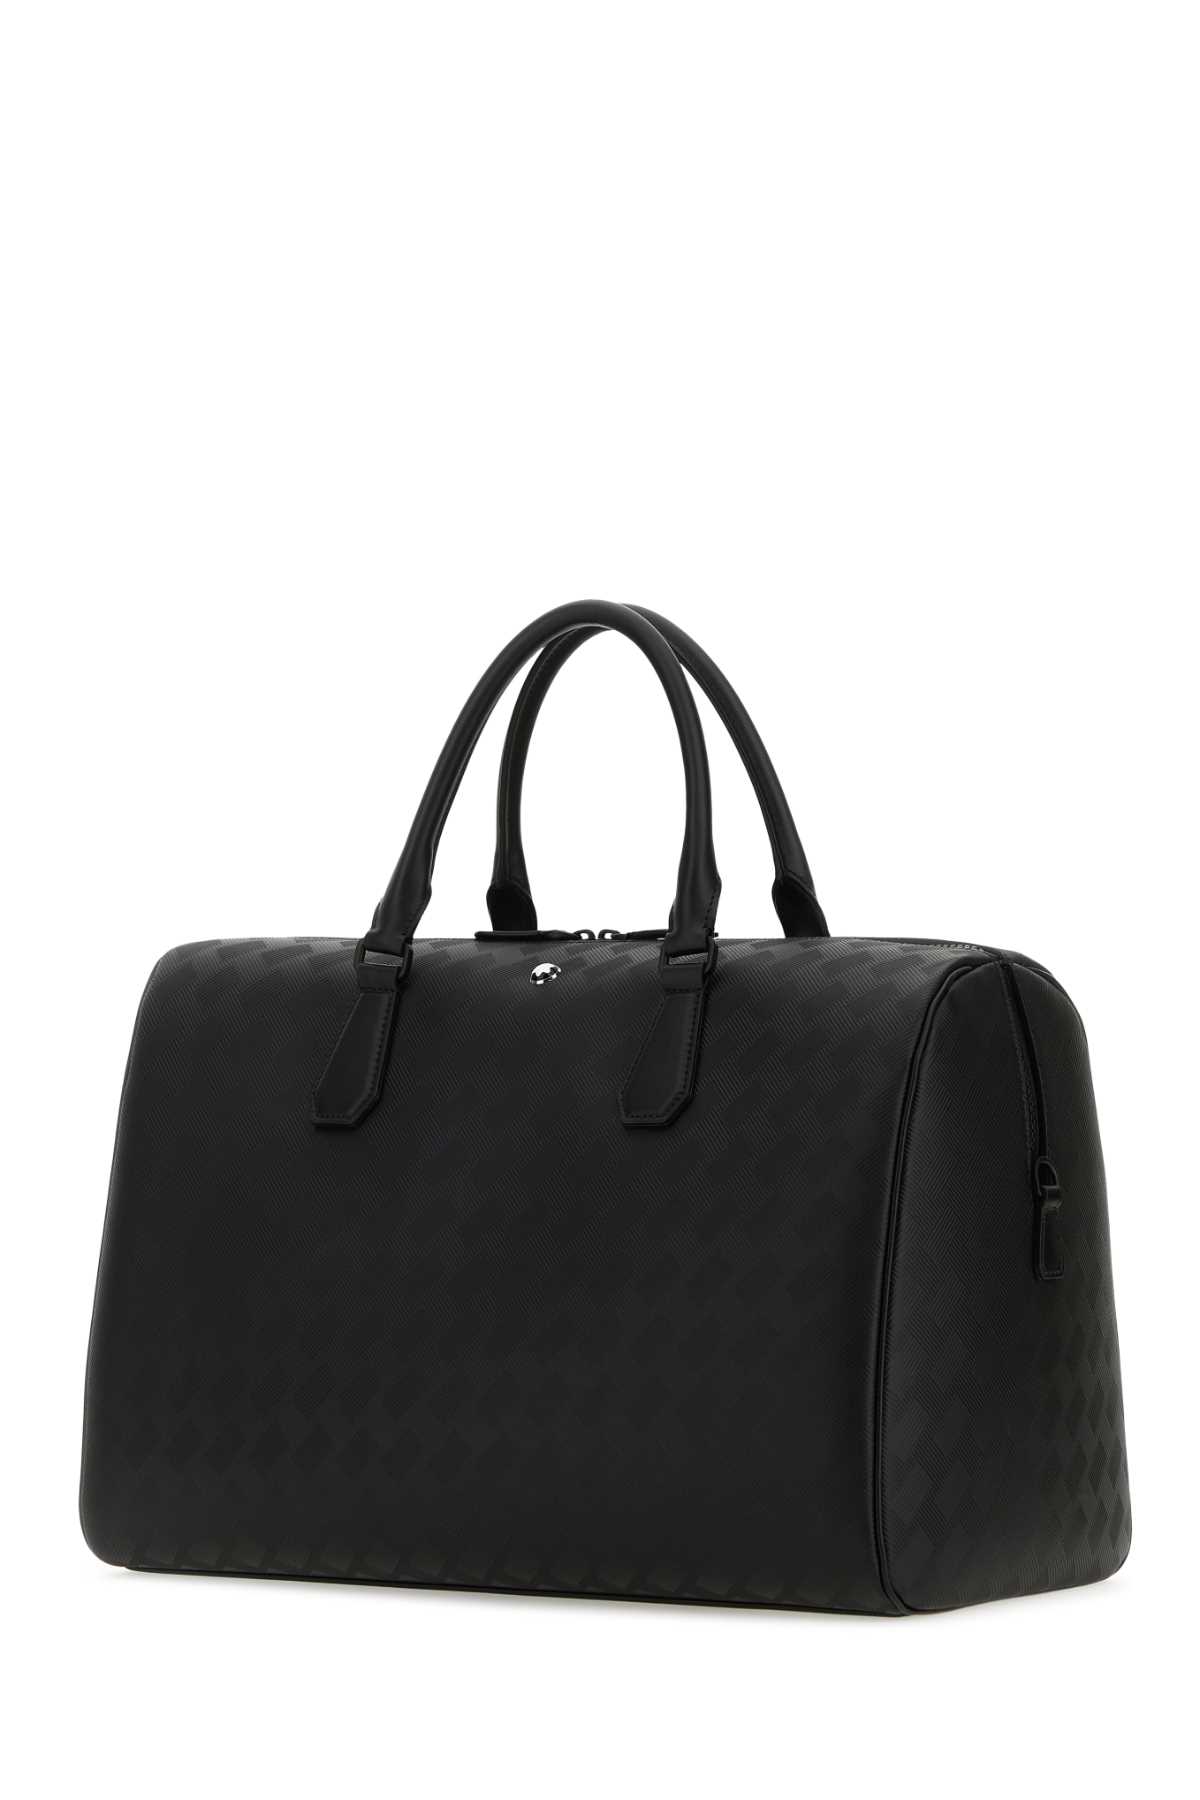 Shop Montblanc Black Leather 142 Travel Bag